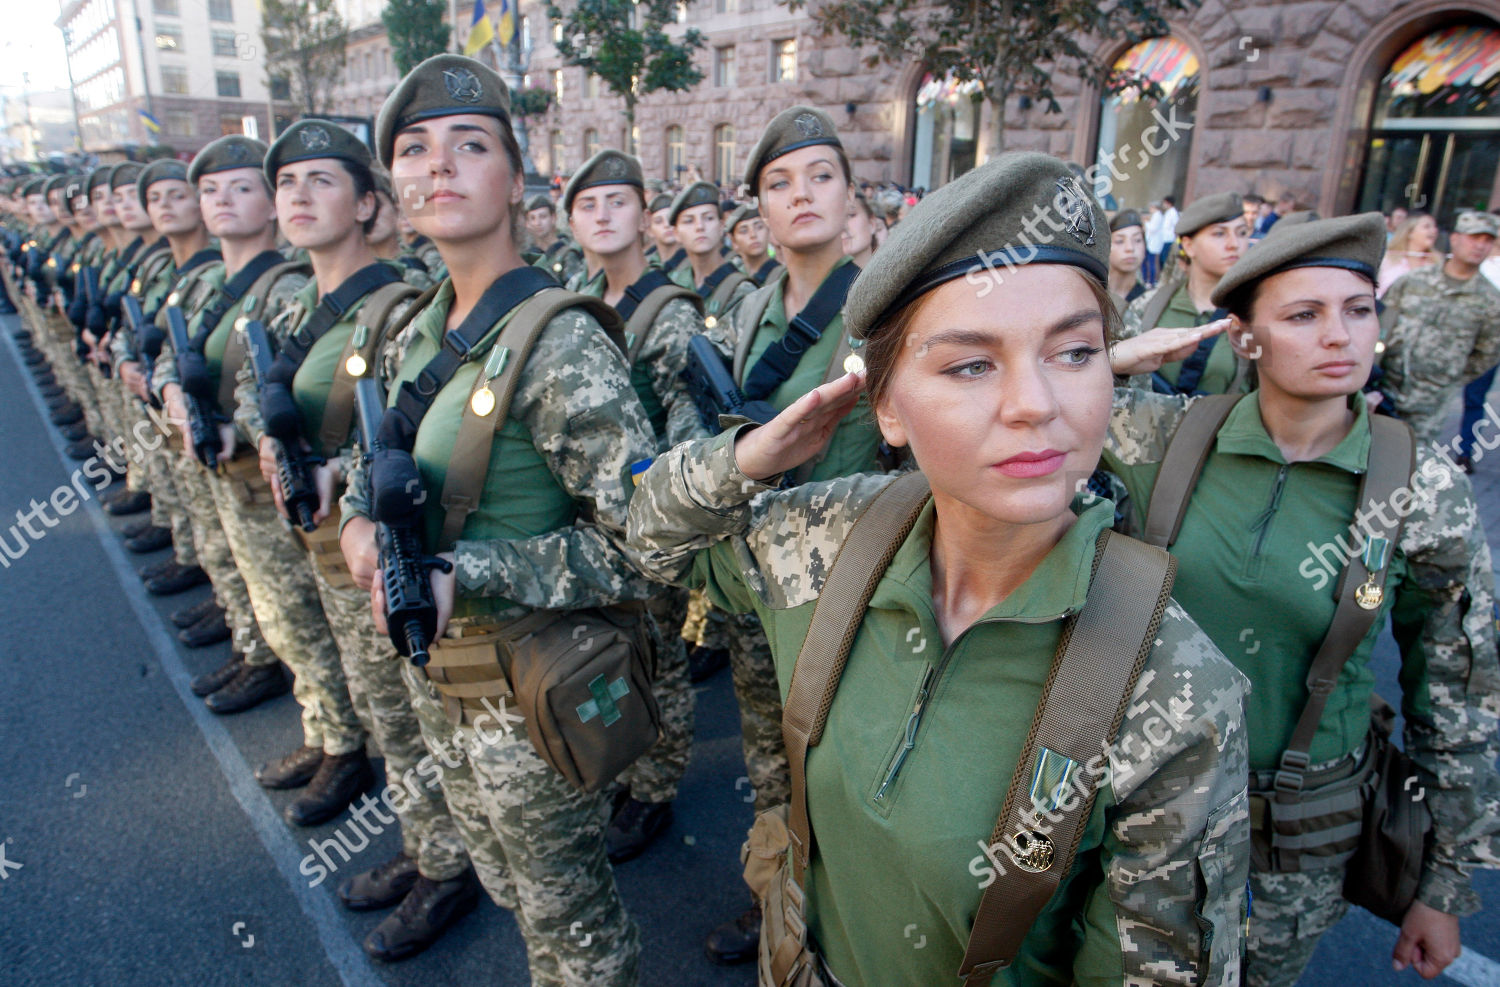 military-parade-dress-rehearsal-in-kiev-ukraine-shutterstock-editorial-9799679i.jpg